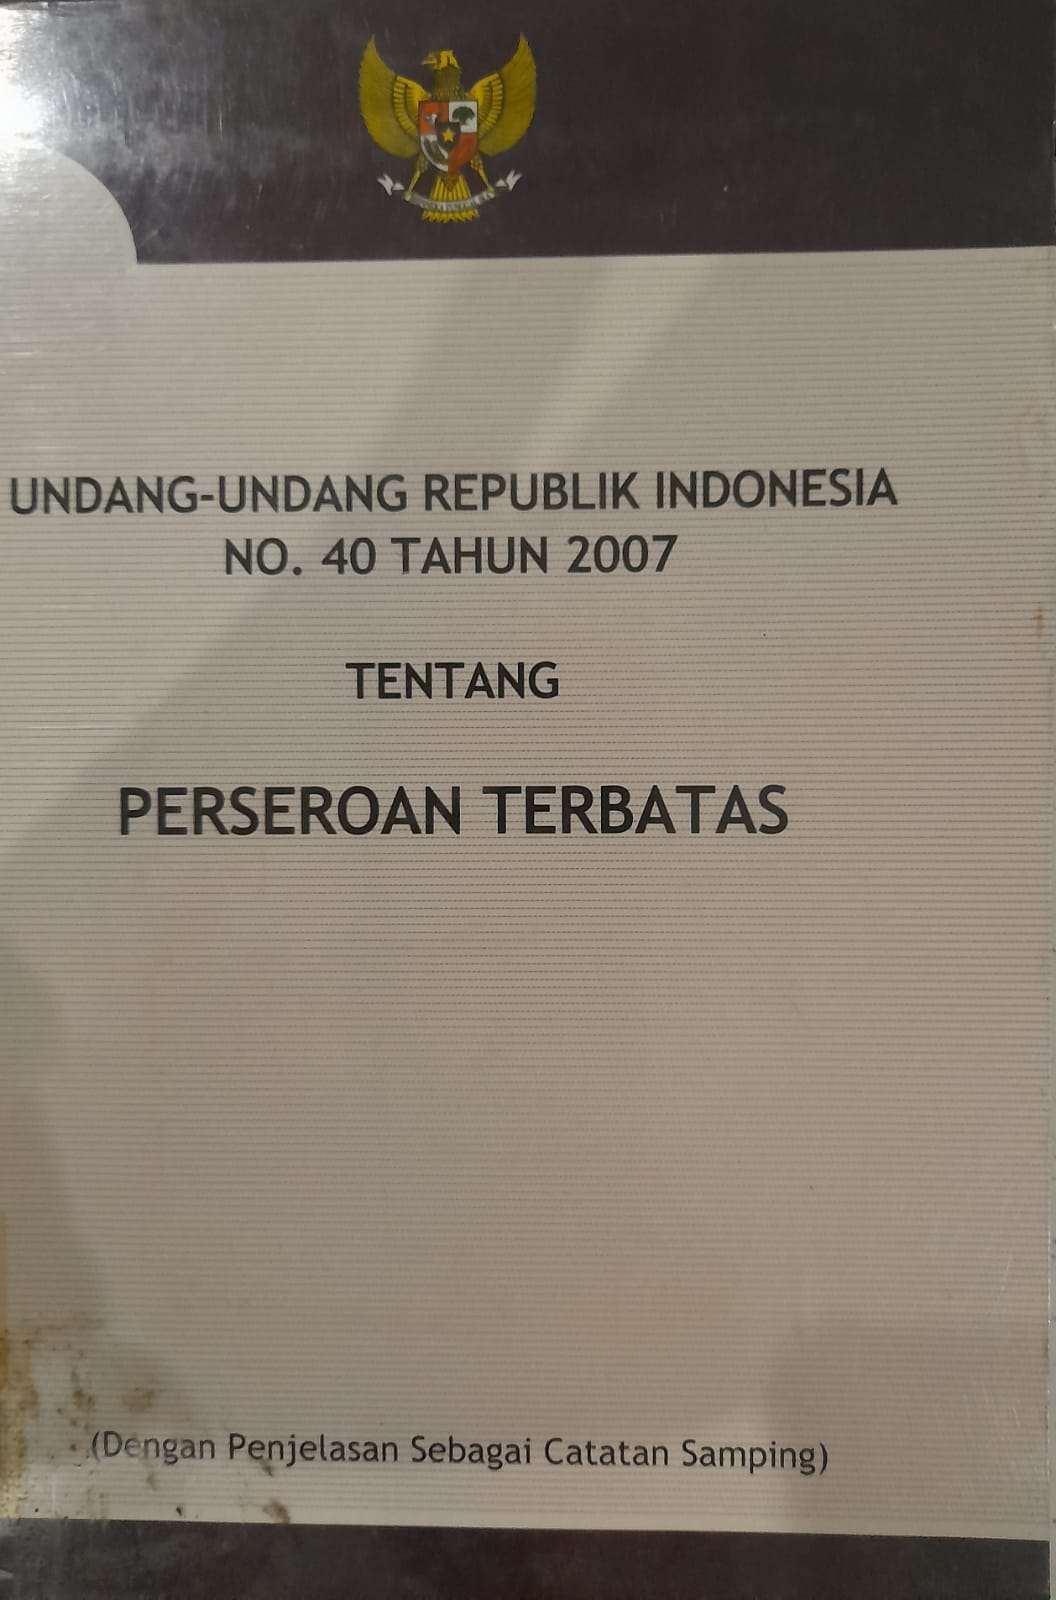 Undang-Undang Republik Indonesia No. 40 Tahun 2007 tentang Perseroan Terbatas